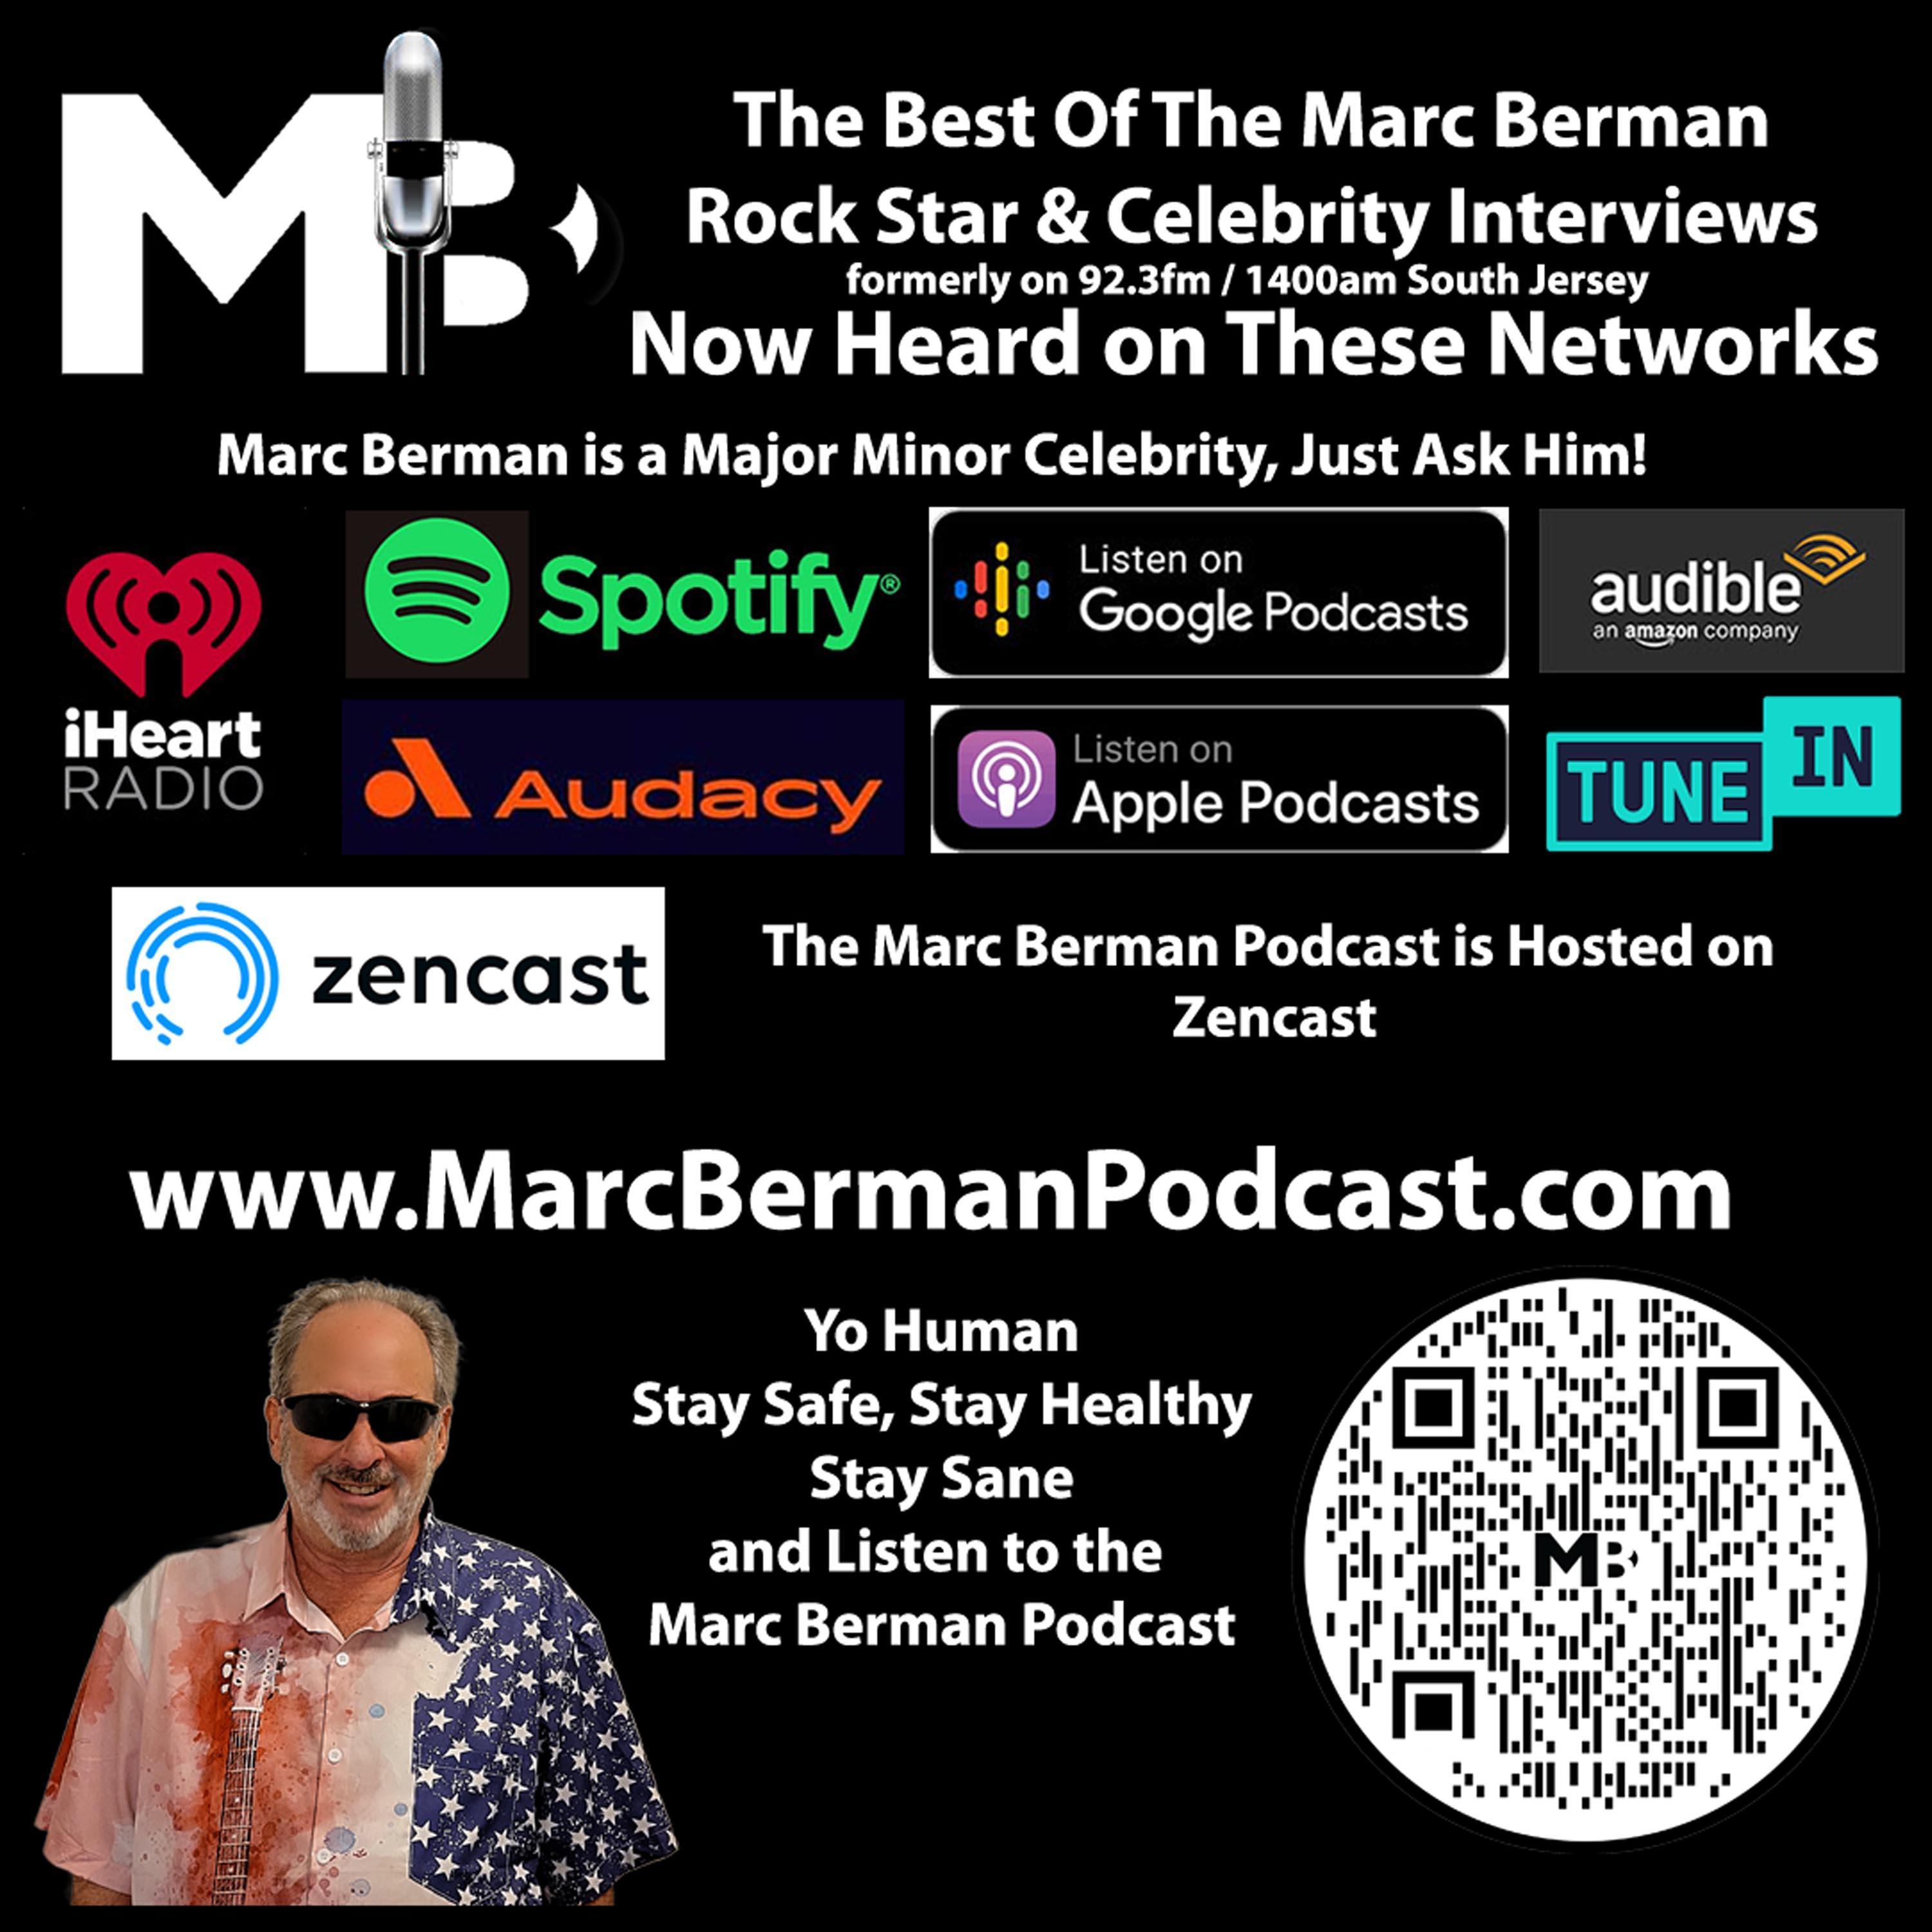 The Best of the Marc Berman Rock Star & Celebrity Interviews